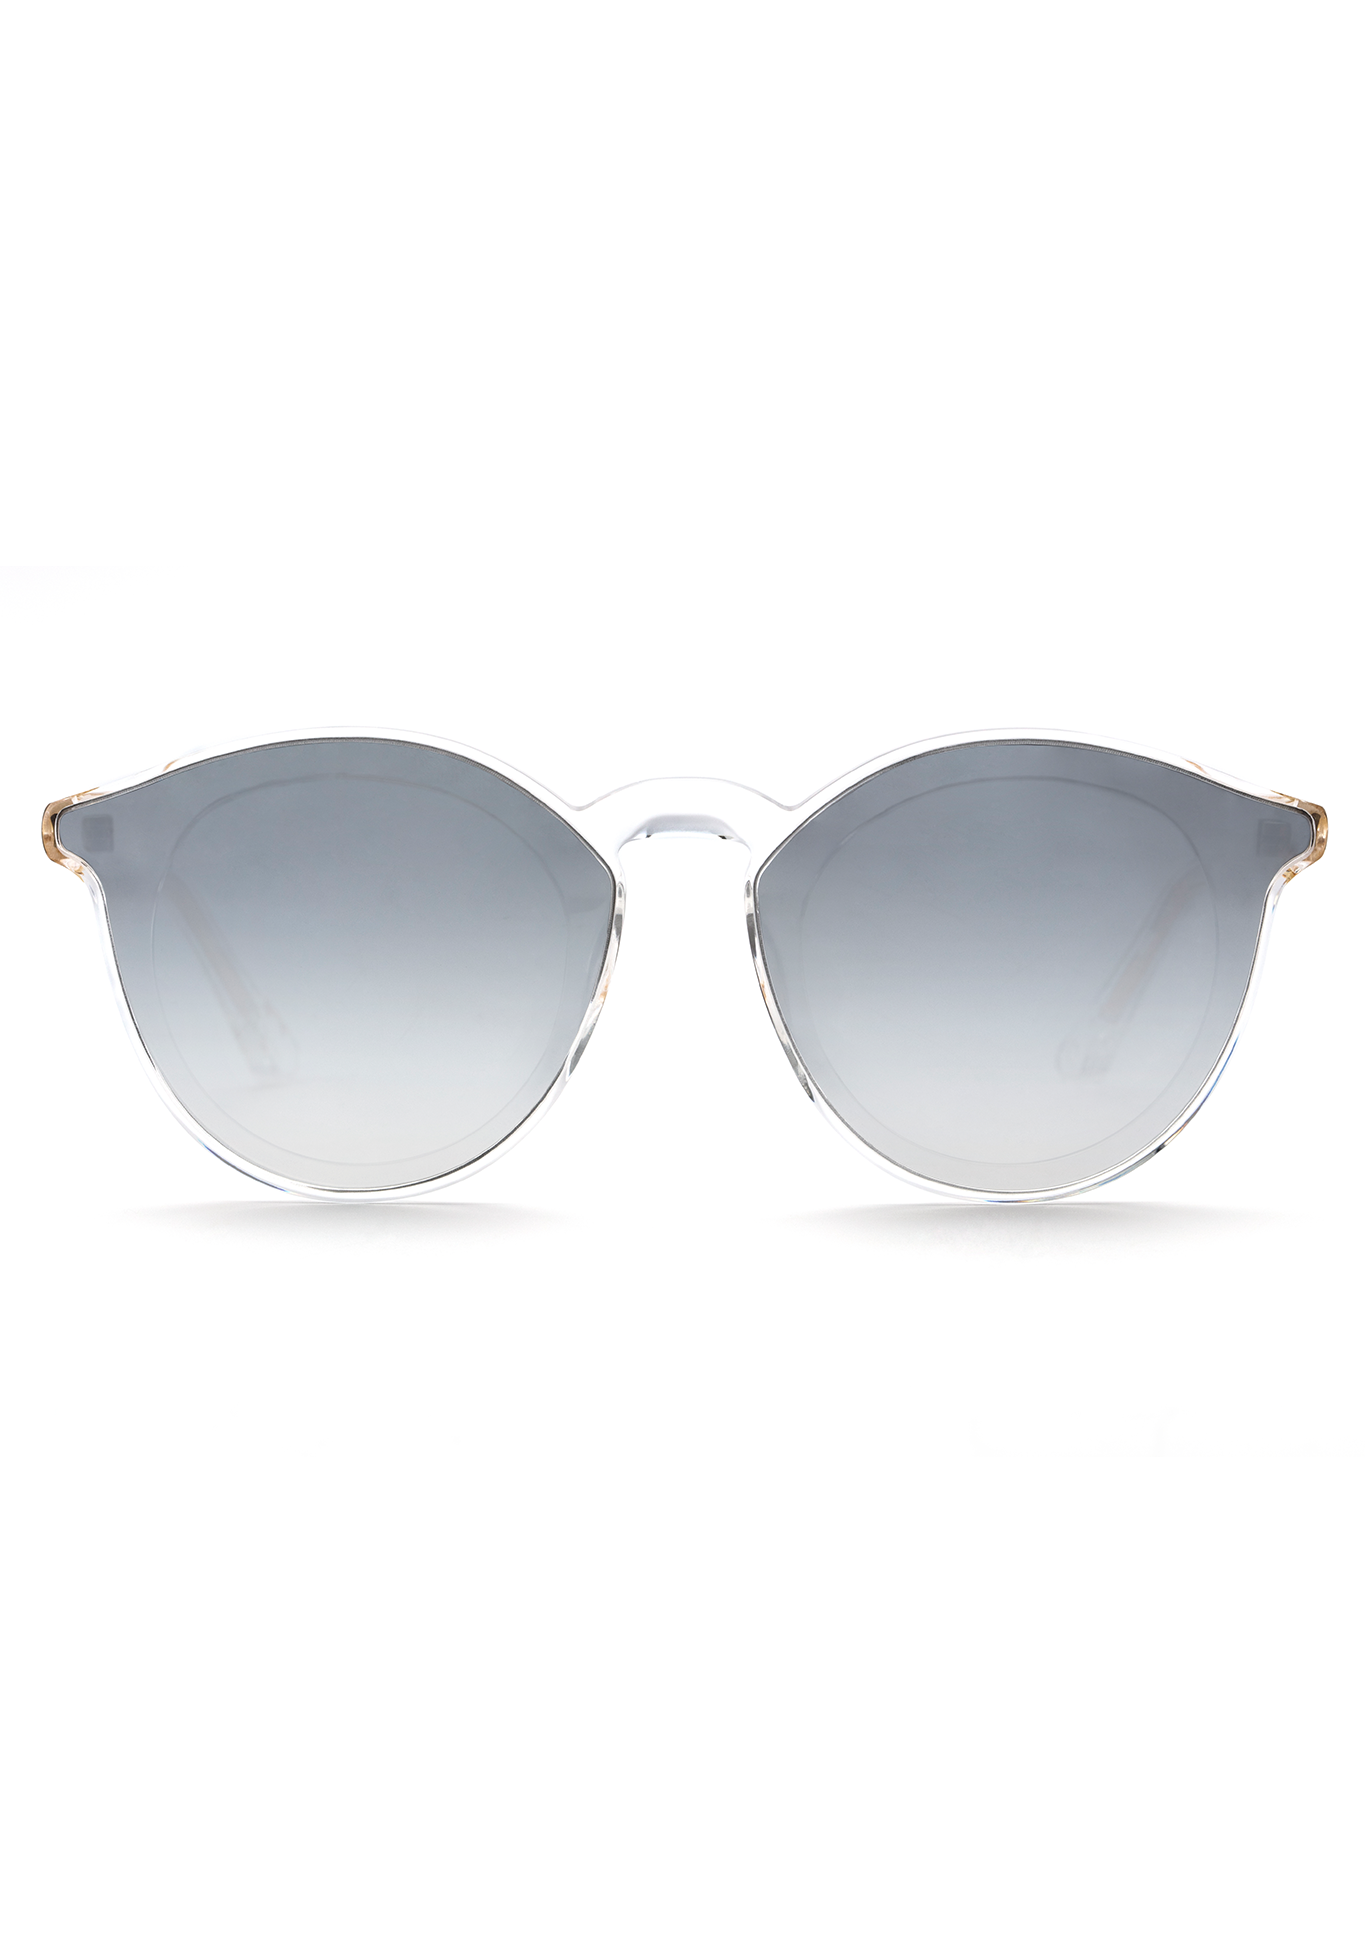 KREWE COLLINS NYLON - Crystal - Men/Women Round Sunglasses - Overlay Mirrored Lenses - 62